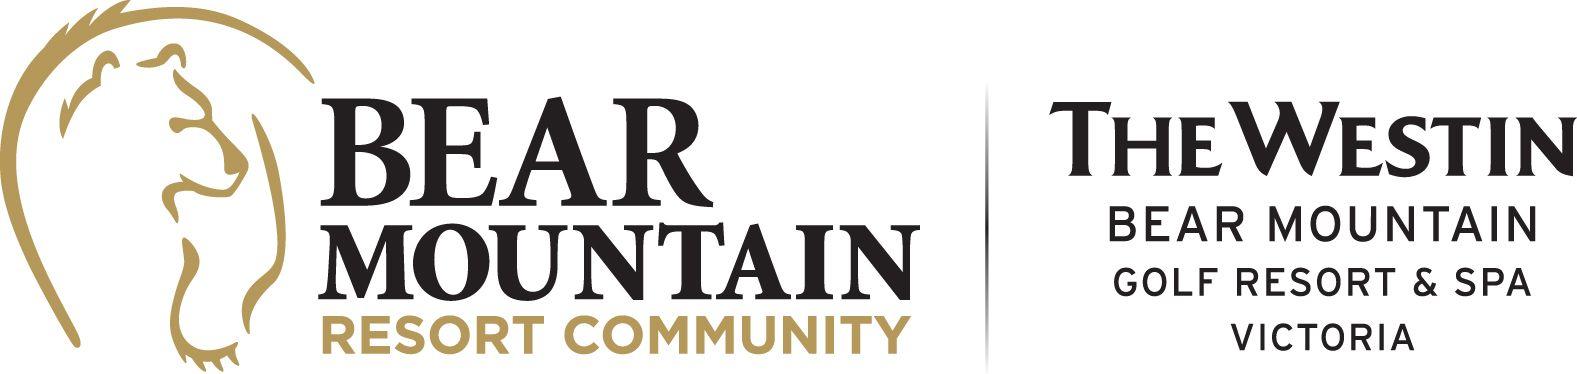 Bear Mountain Logo - Bear Mountain Resort Community – Tour de Rock